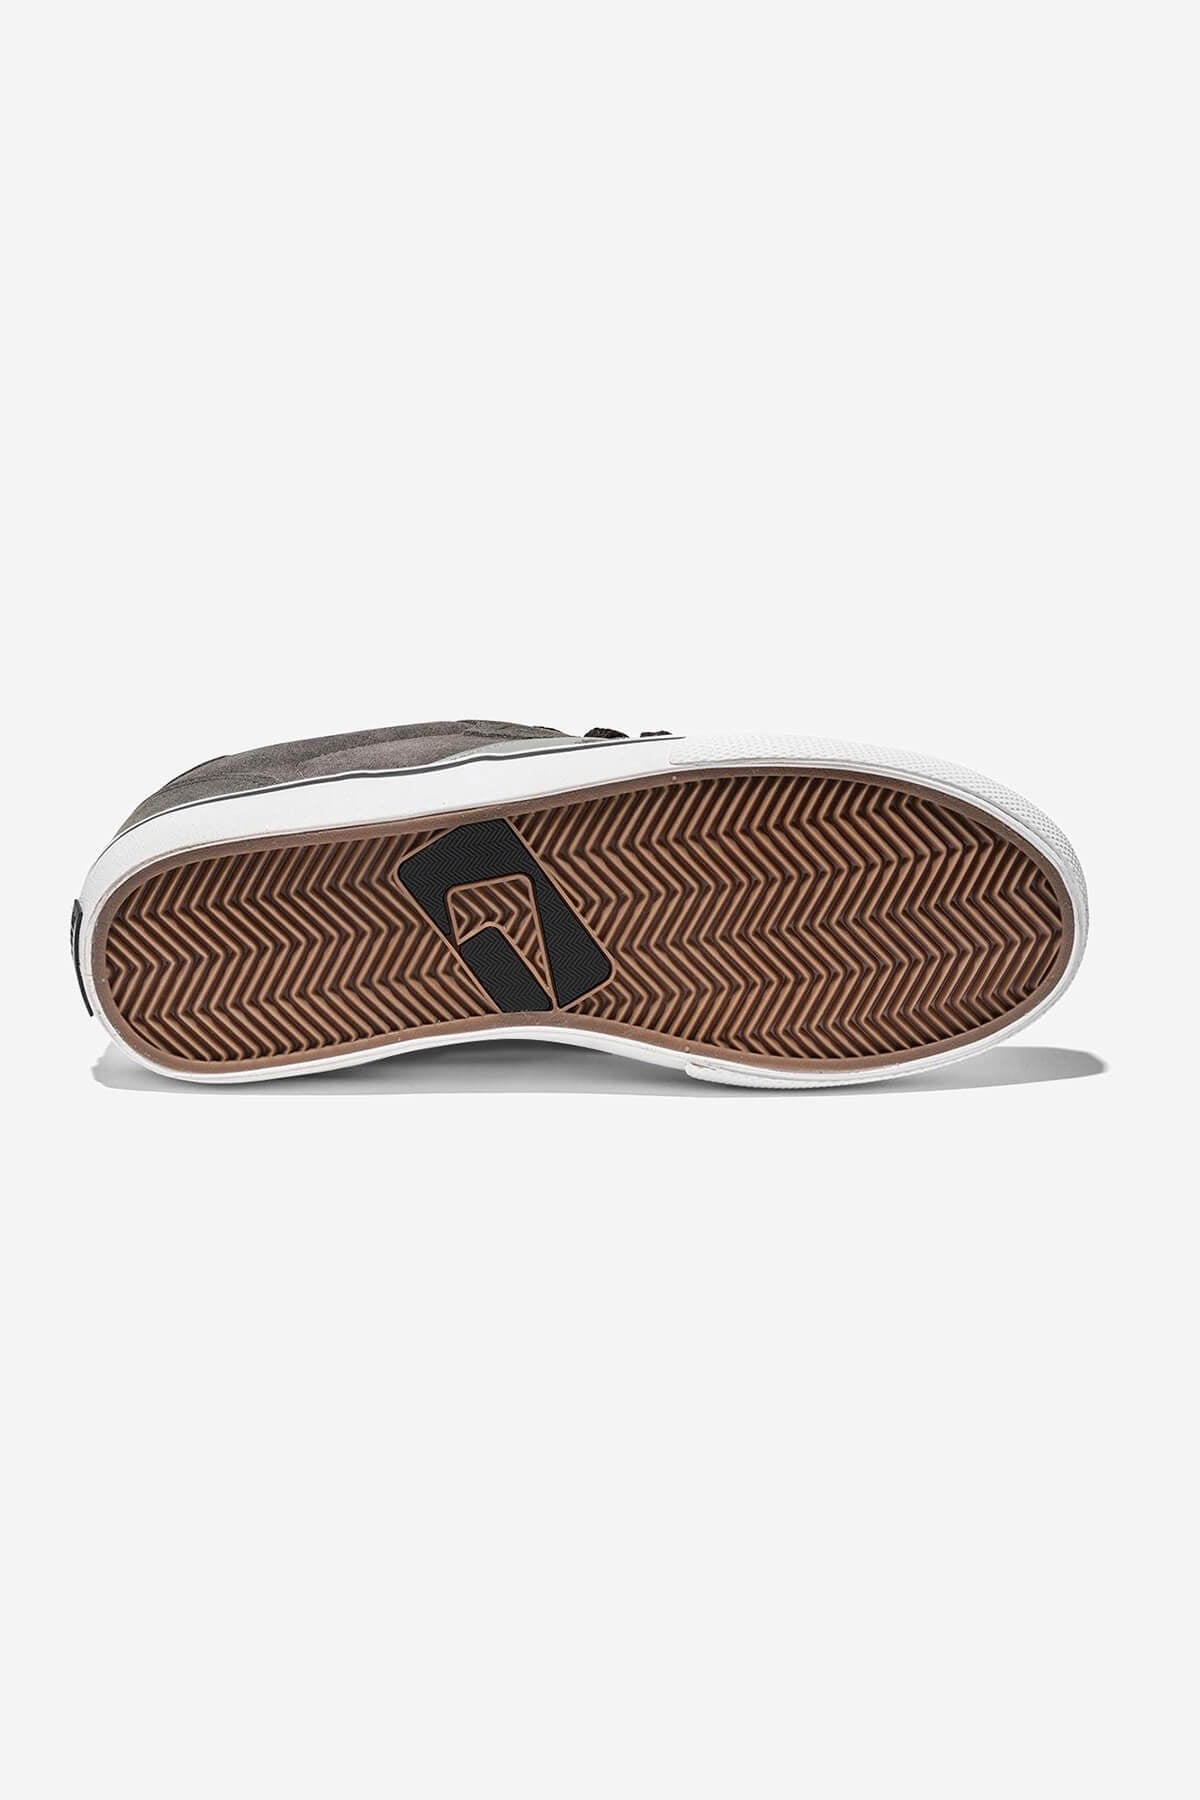 encore-2 charcoal grigio skateboard scarpe